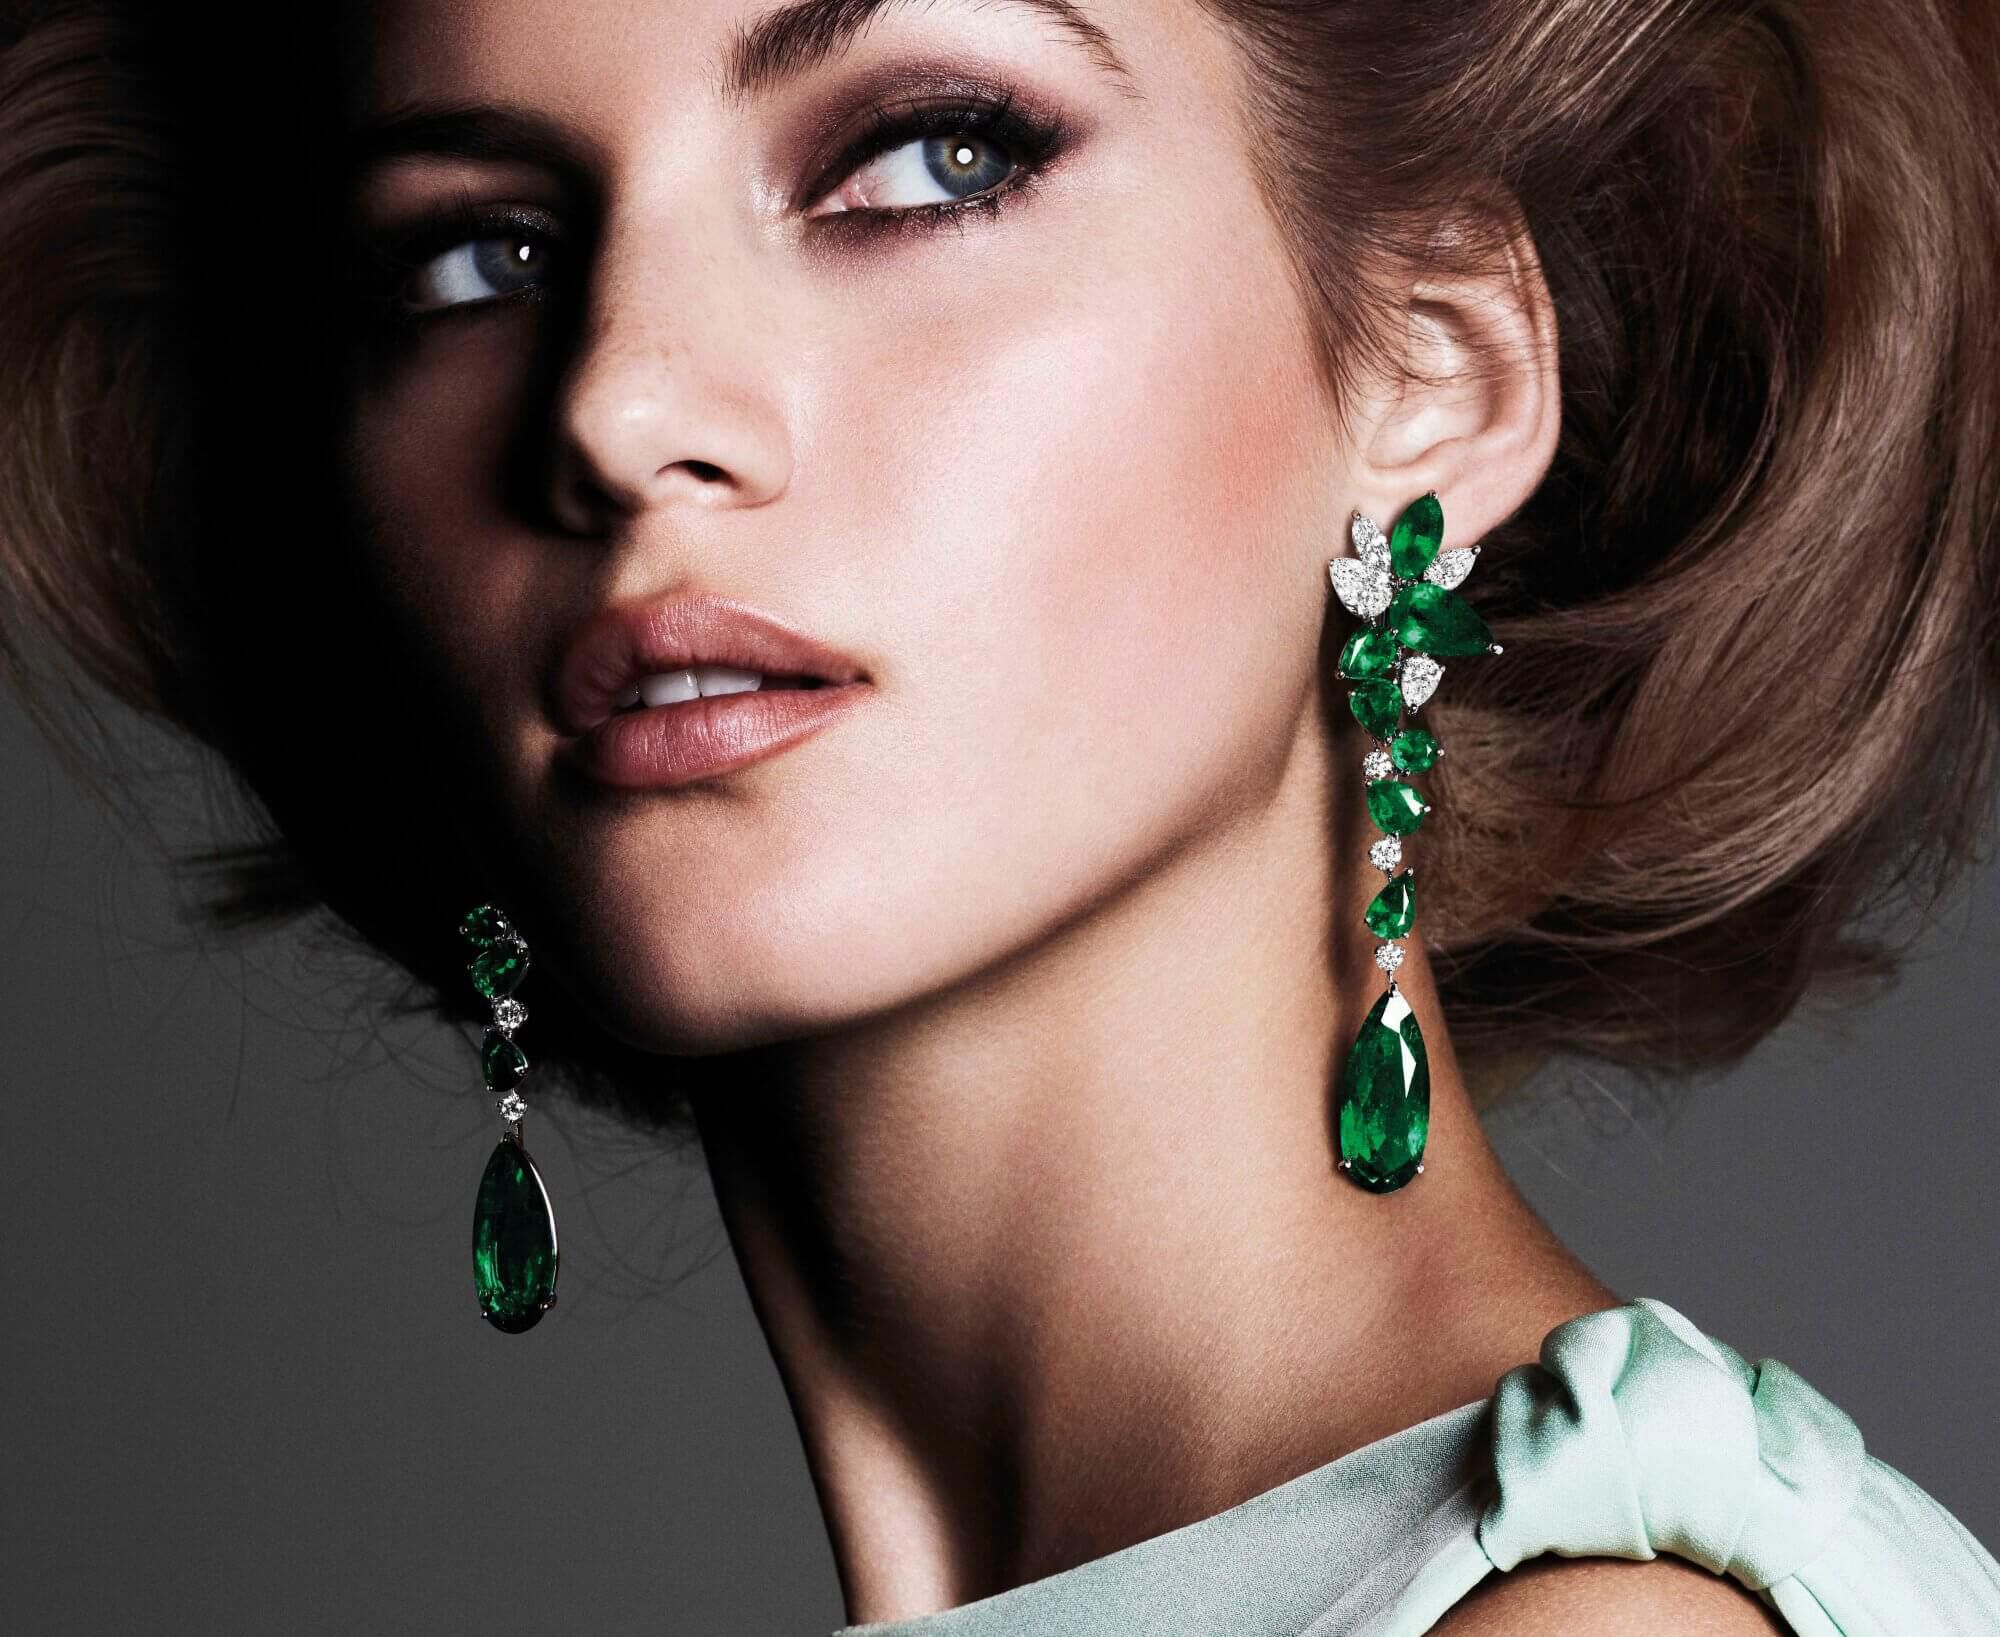 A model wearing Graff emerald and diamond earrings